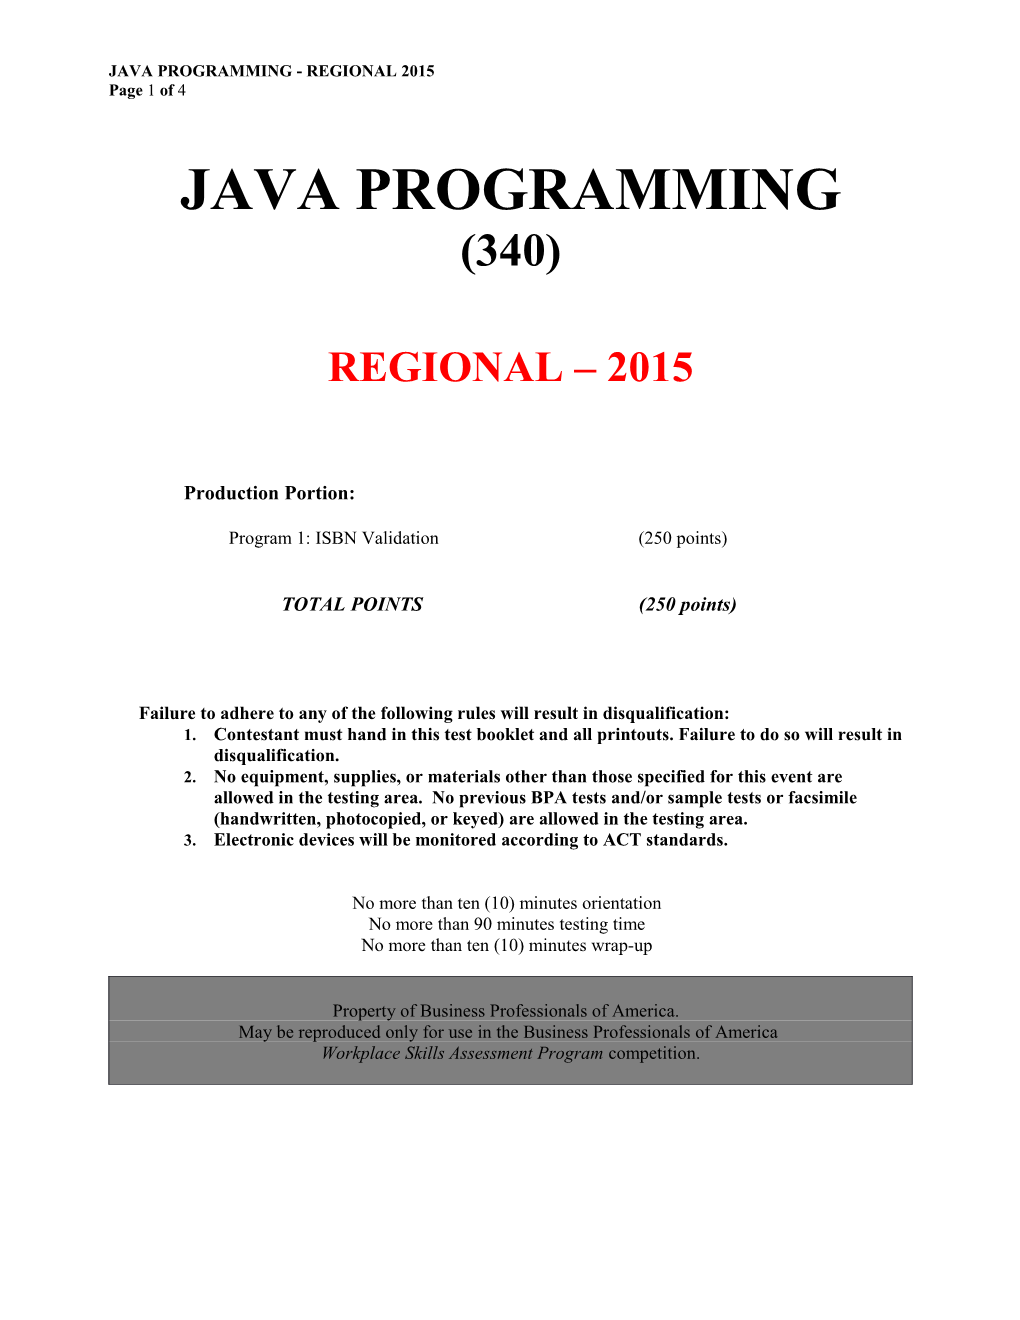 Java Programming - Regional 2015